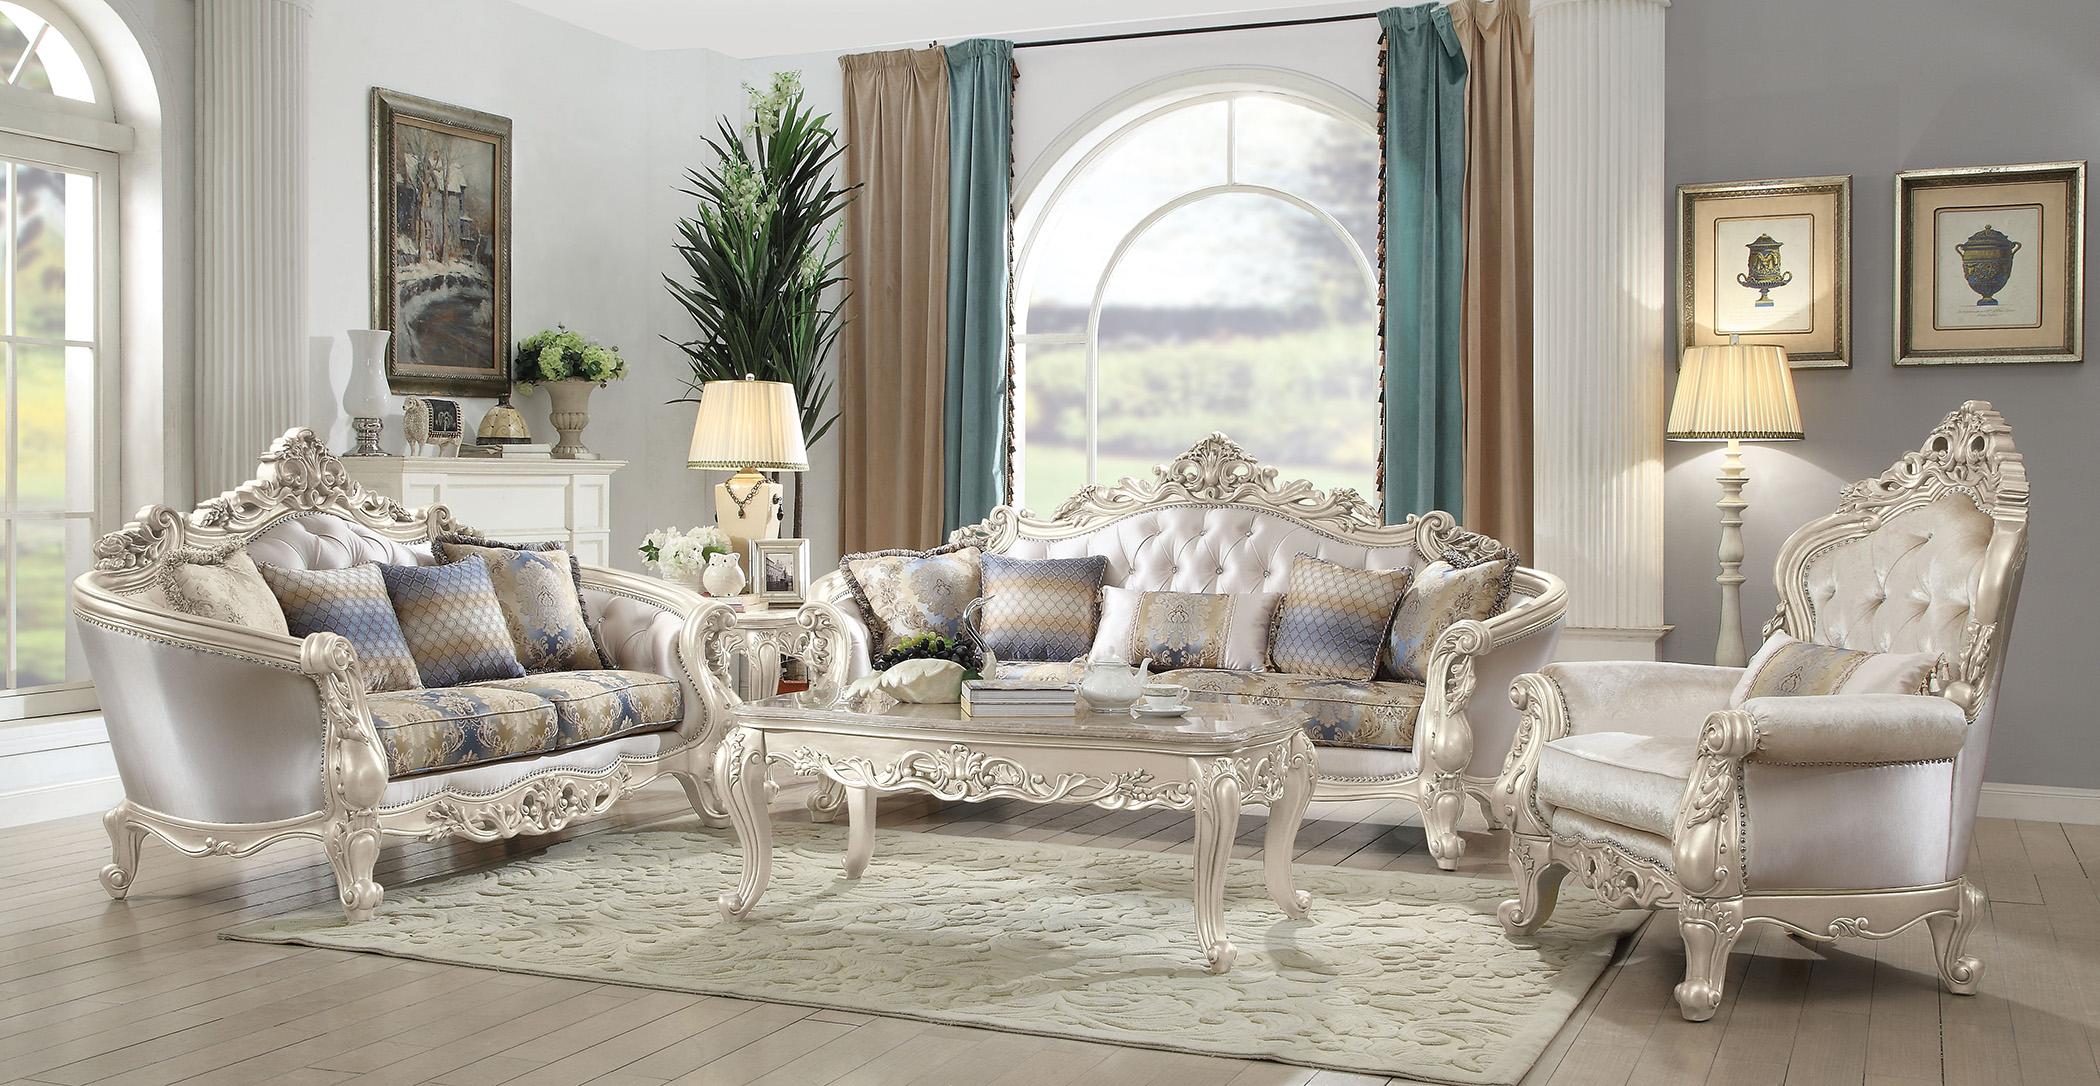 Classic, Traditional Sofa Loveseat and Chair Set Gorsedd-52440 Gorsedd-52440-Set-3 in Cream Fabric